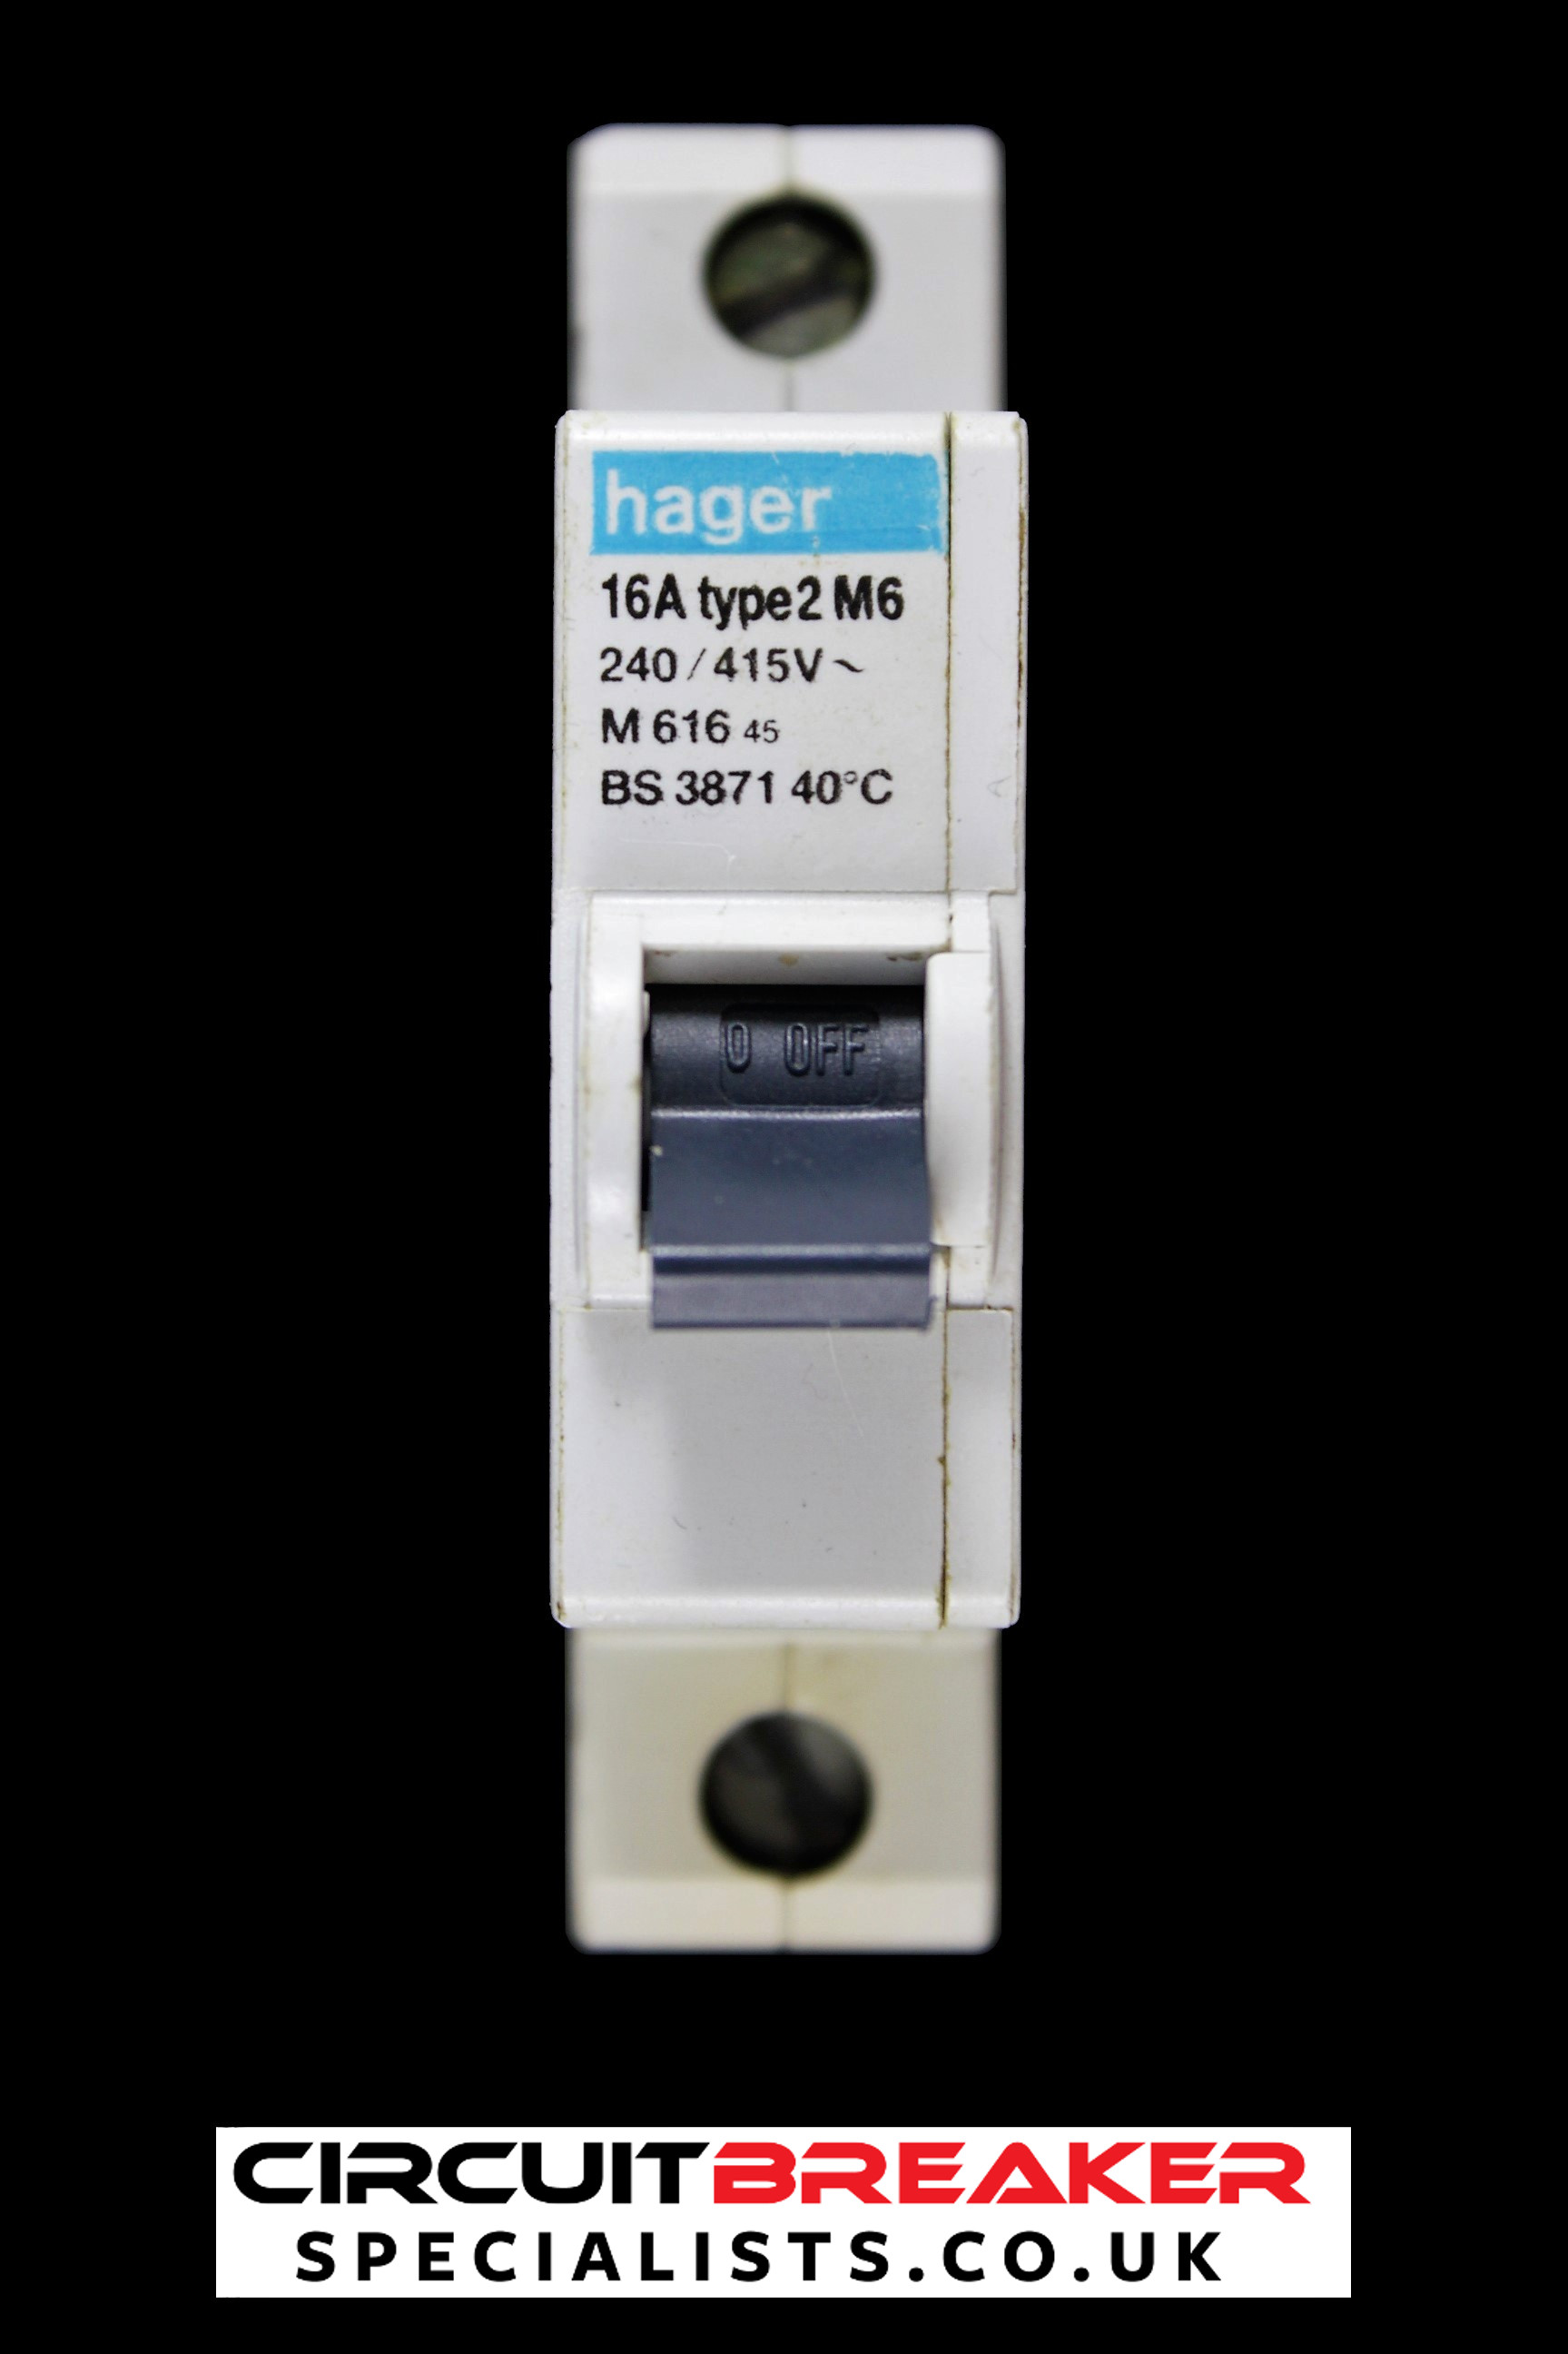 HAGER 16 AMP TYPE 2 M6 MCB CIRCUIT BREAKER M616 45